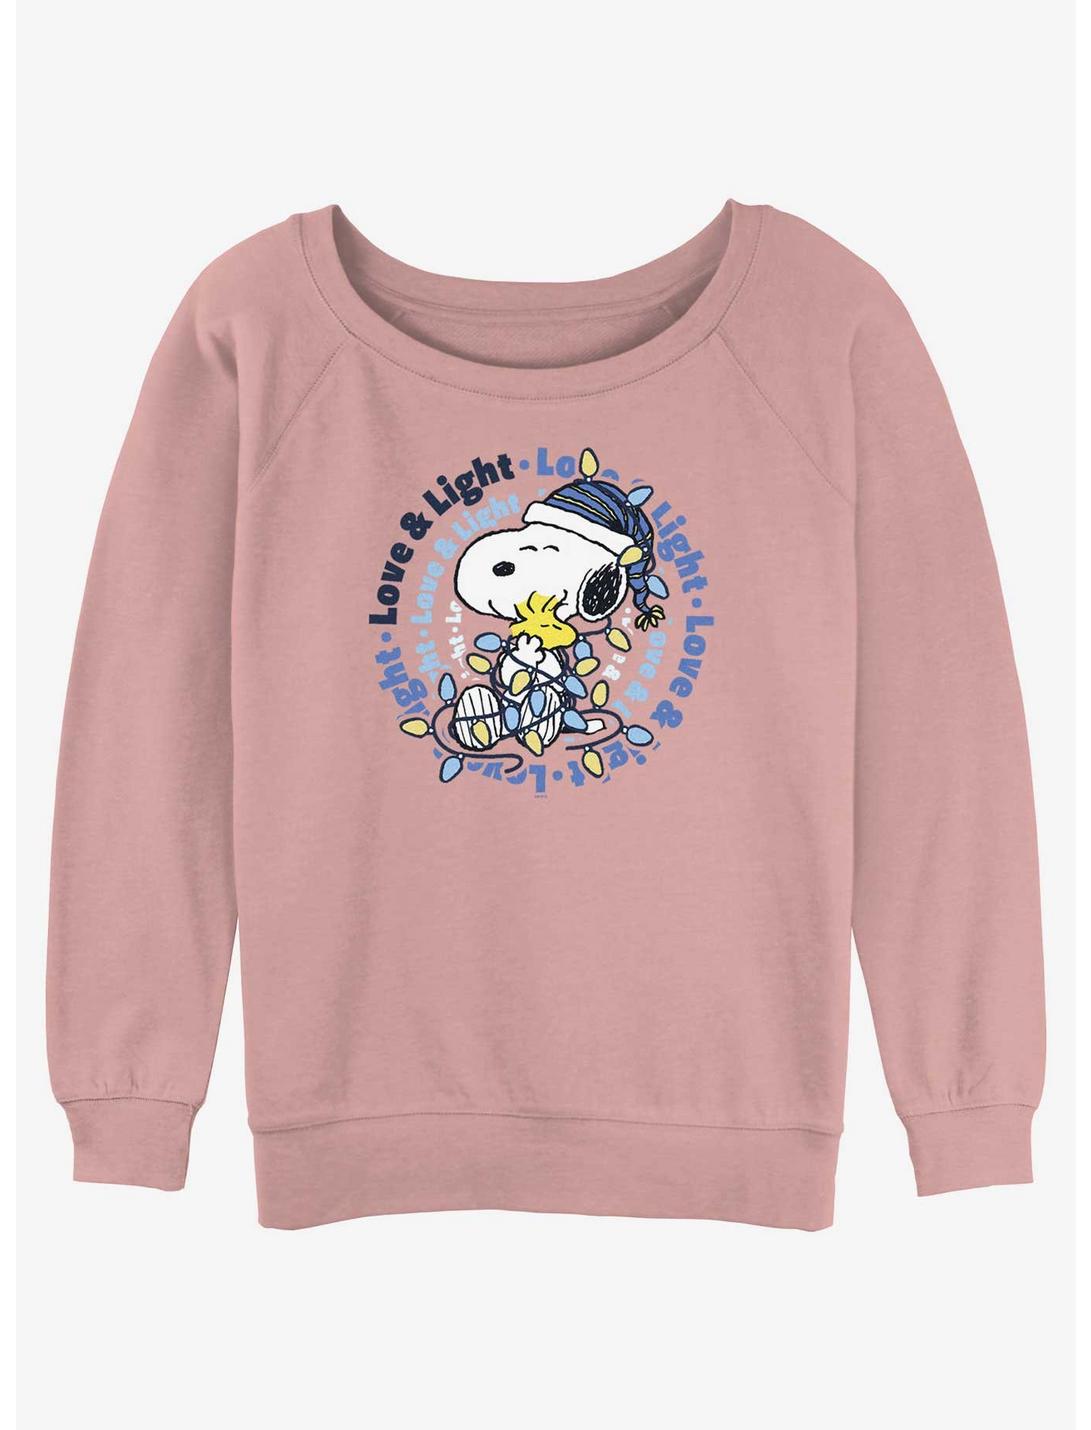 Peanuts Love & Light Girls Slouchy Sweatshirt - PINK